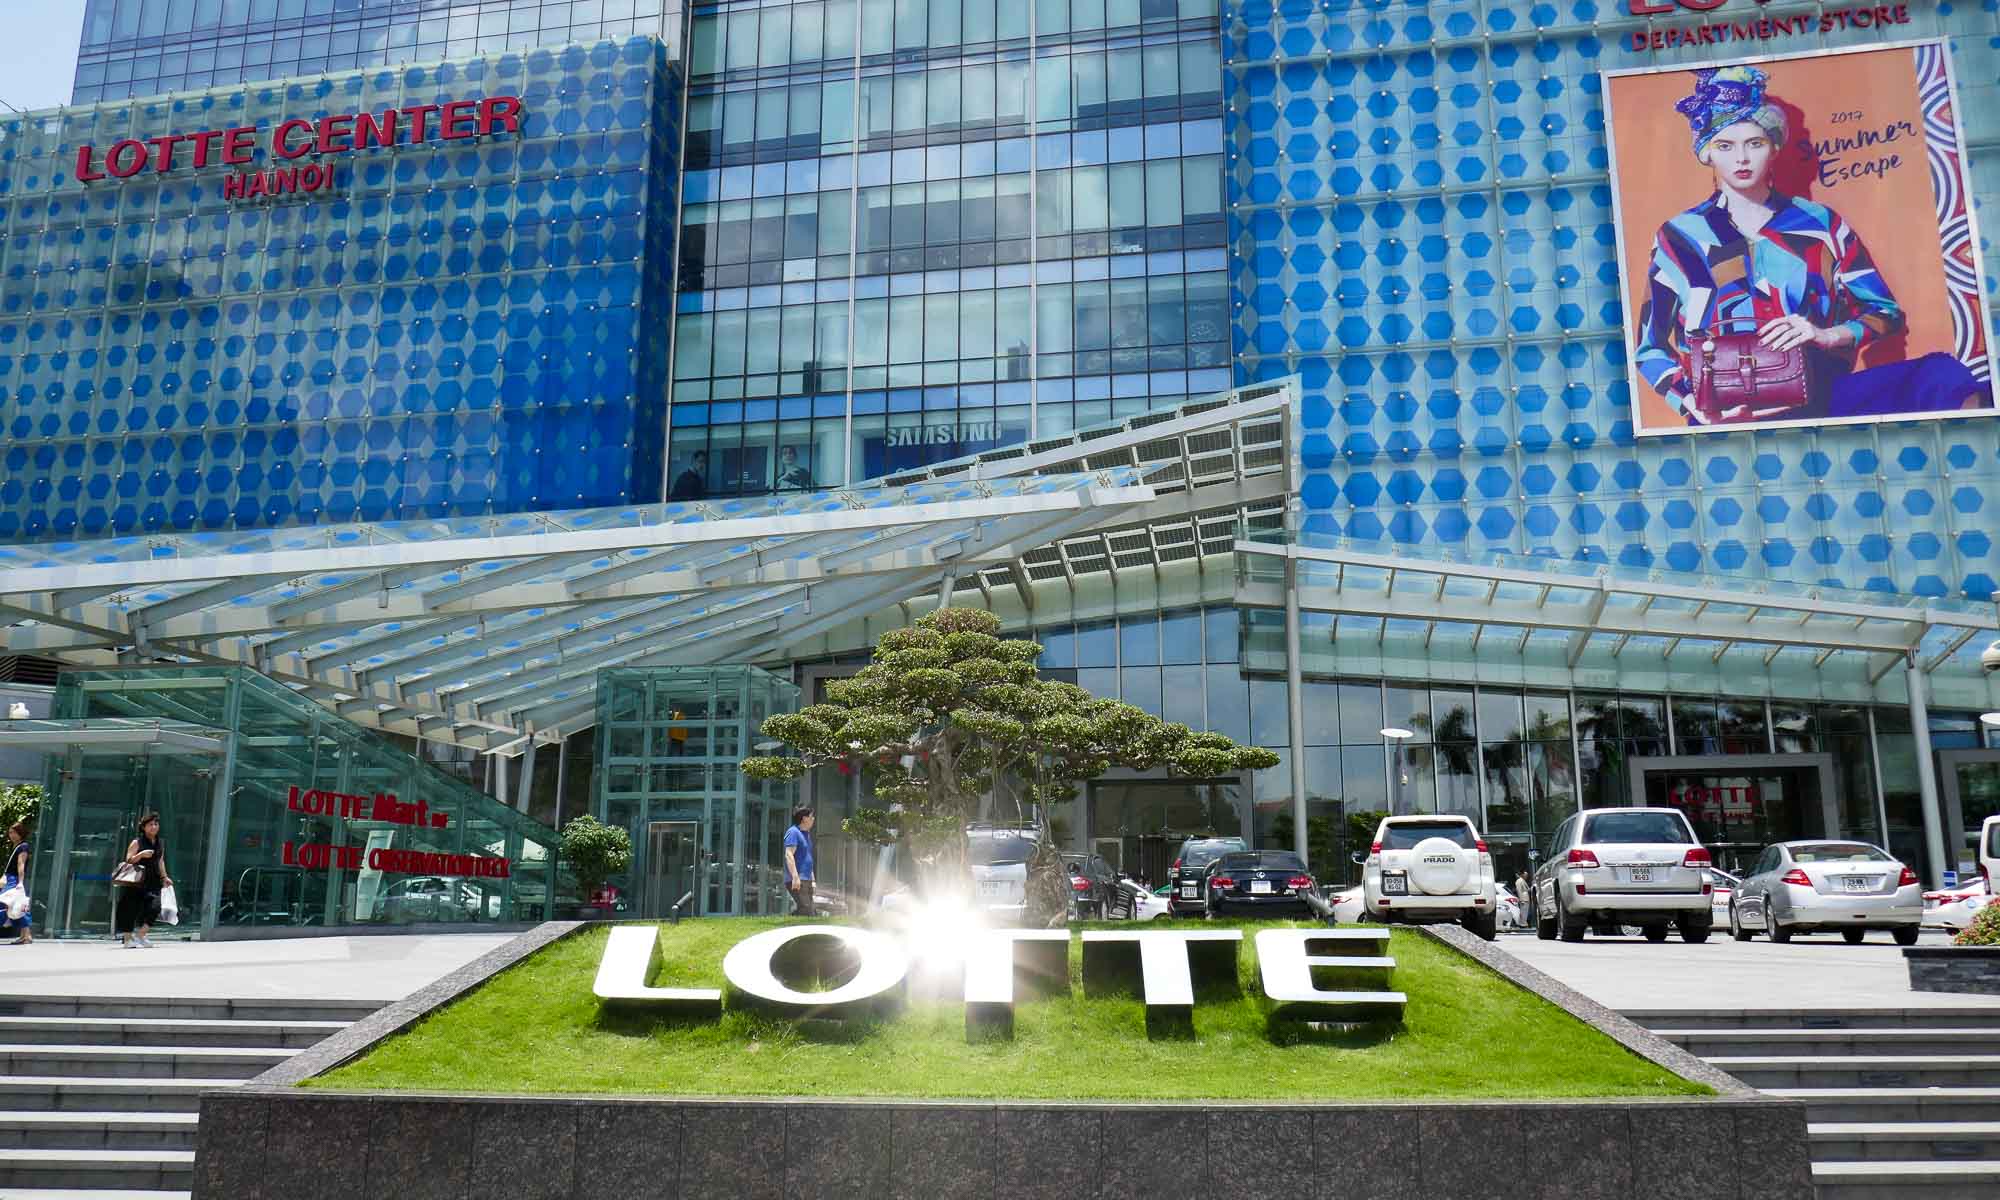 Main entrance of Lotte Center